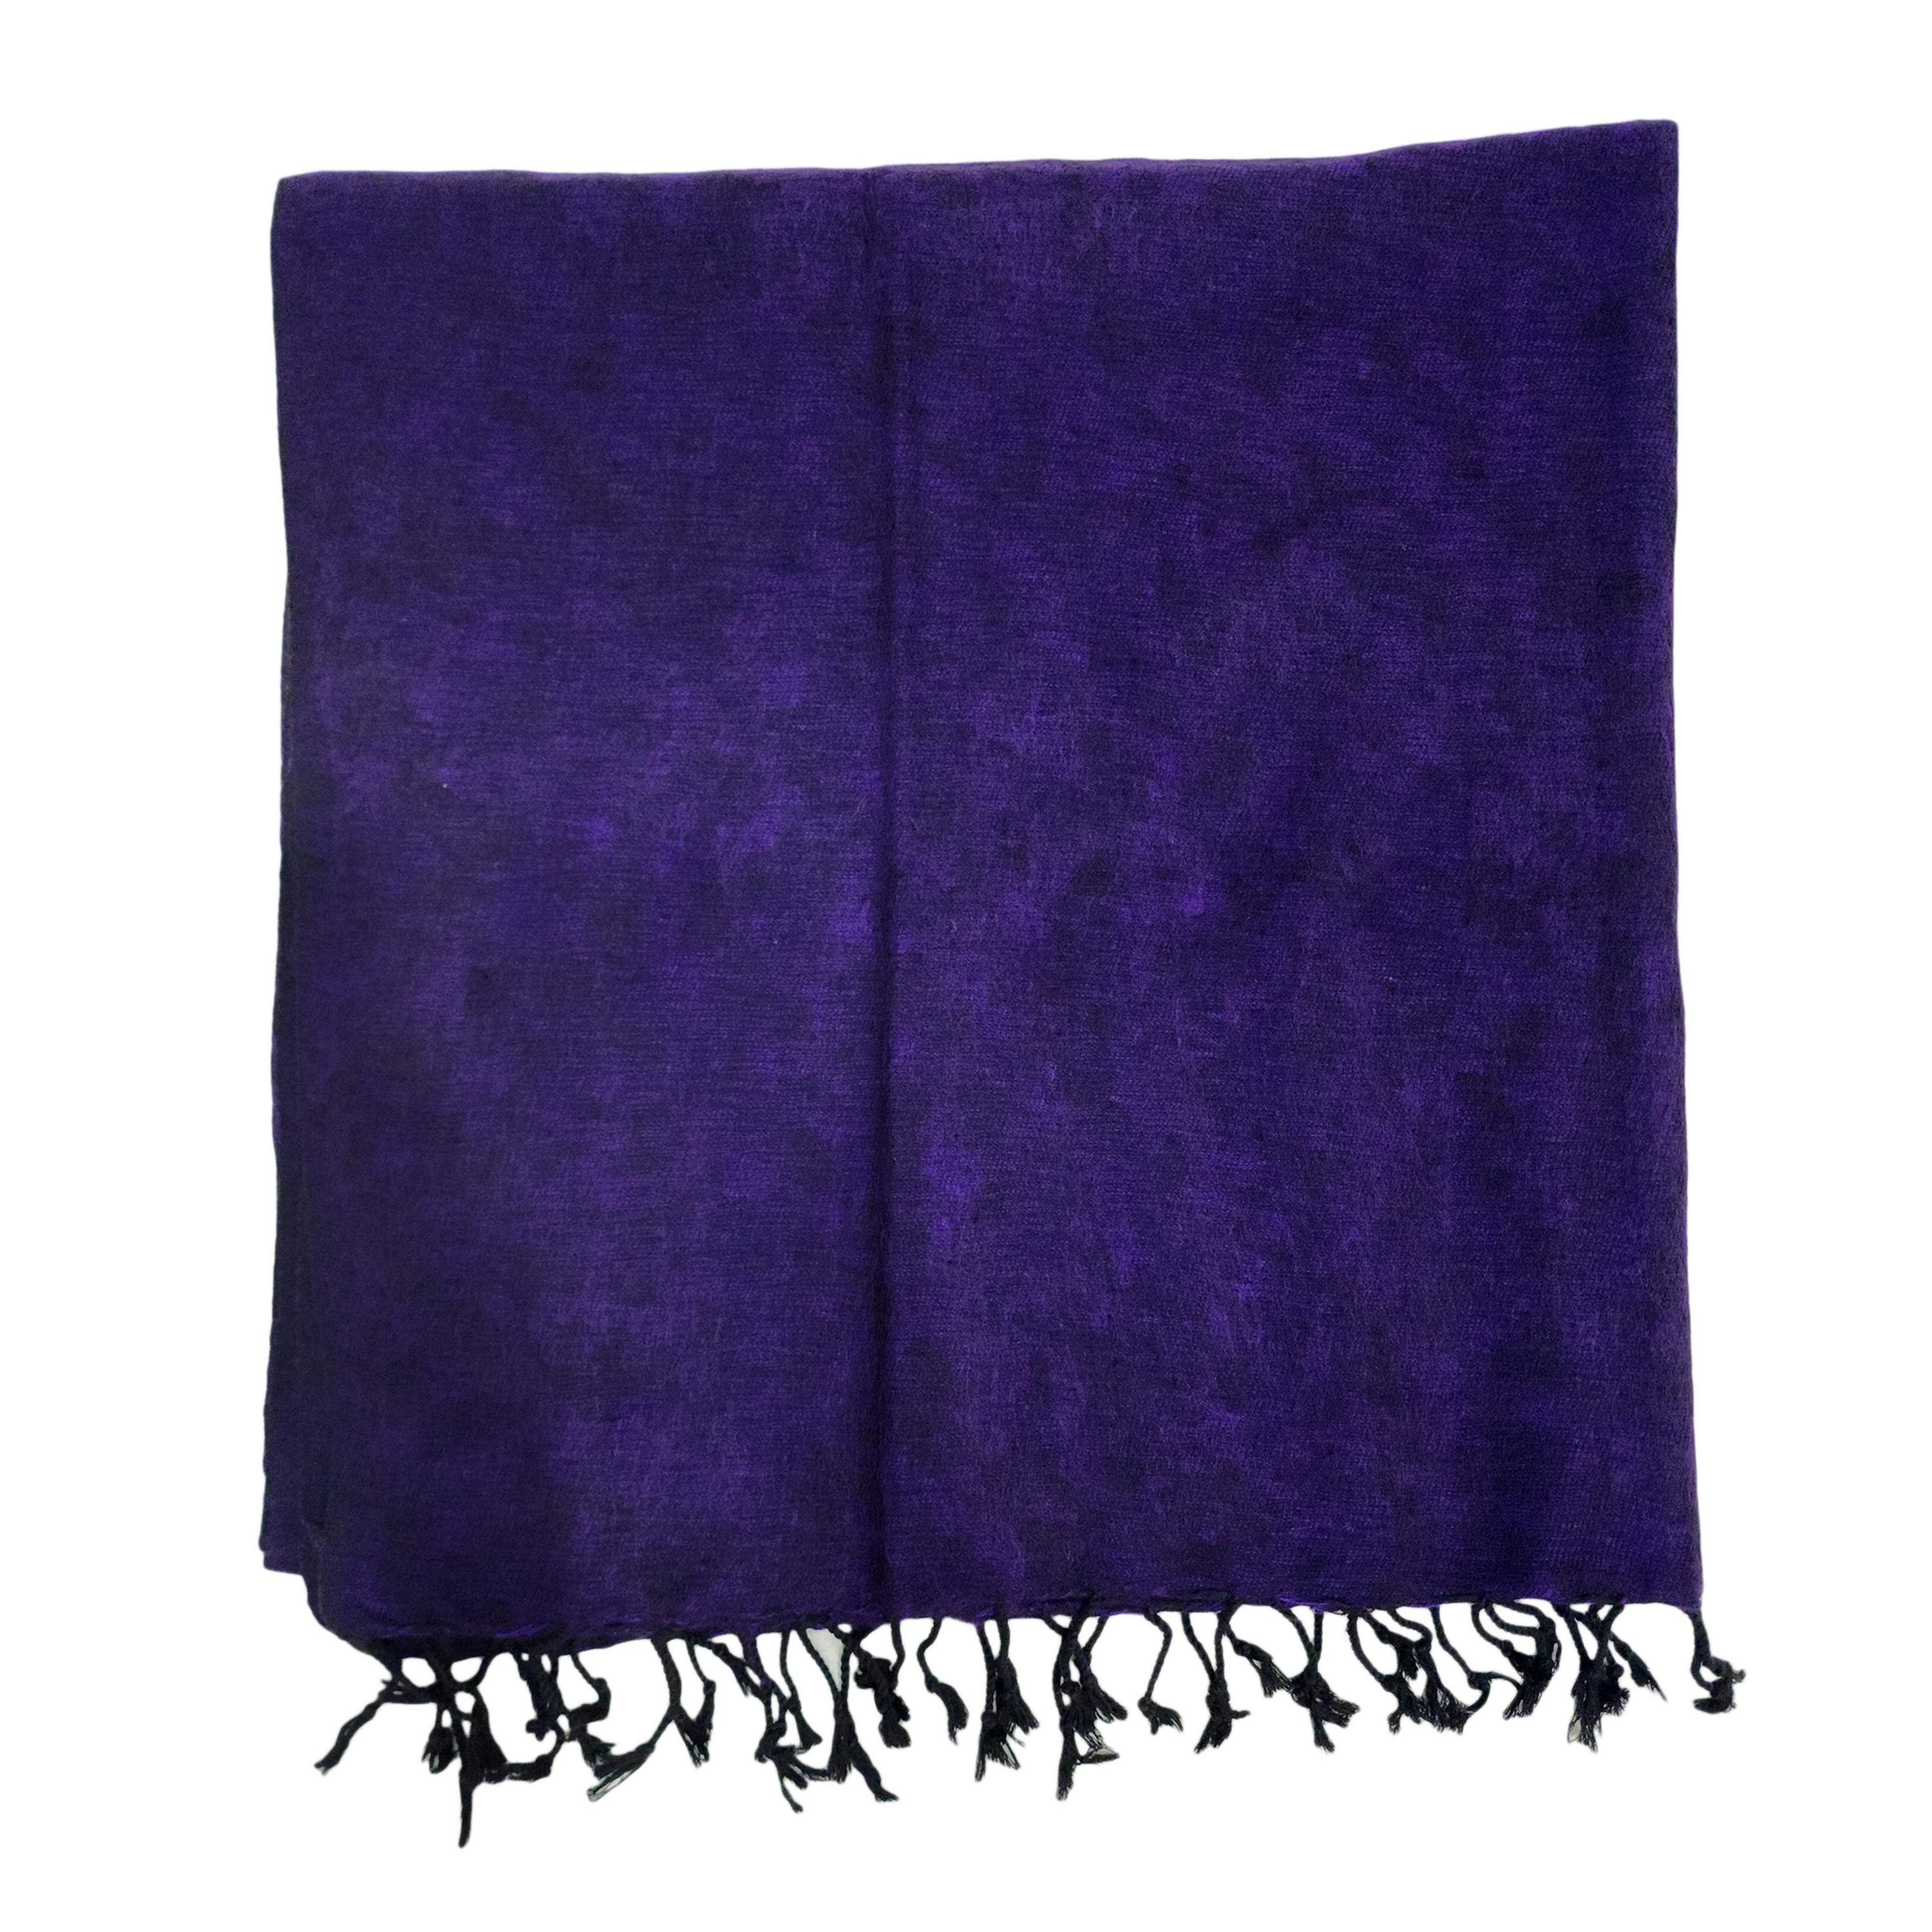 Yak Wool Blanket, Nepali Acrylic Hand Loom Blanket, Color purple